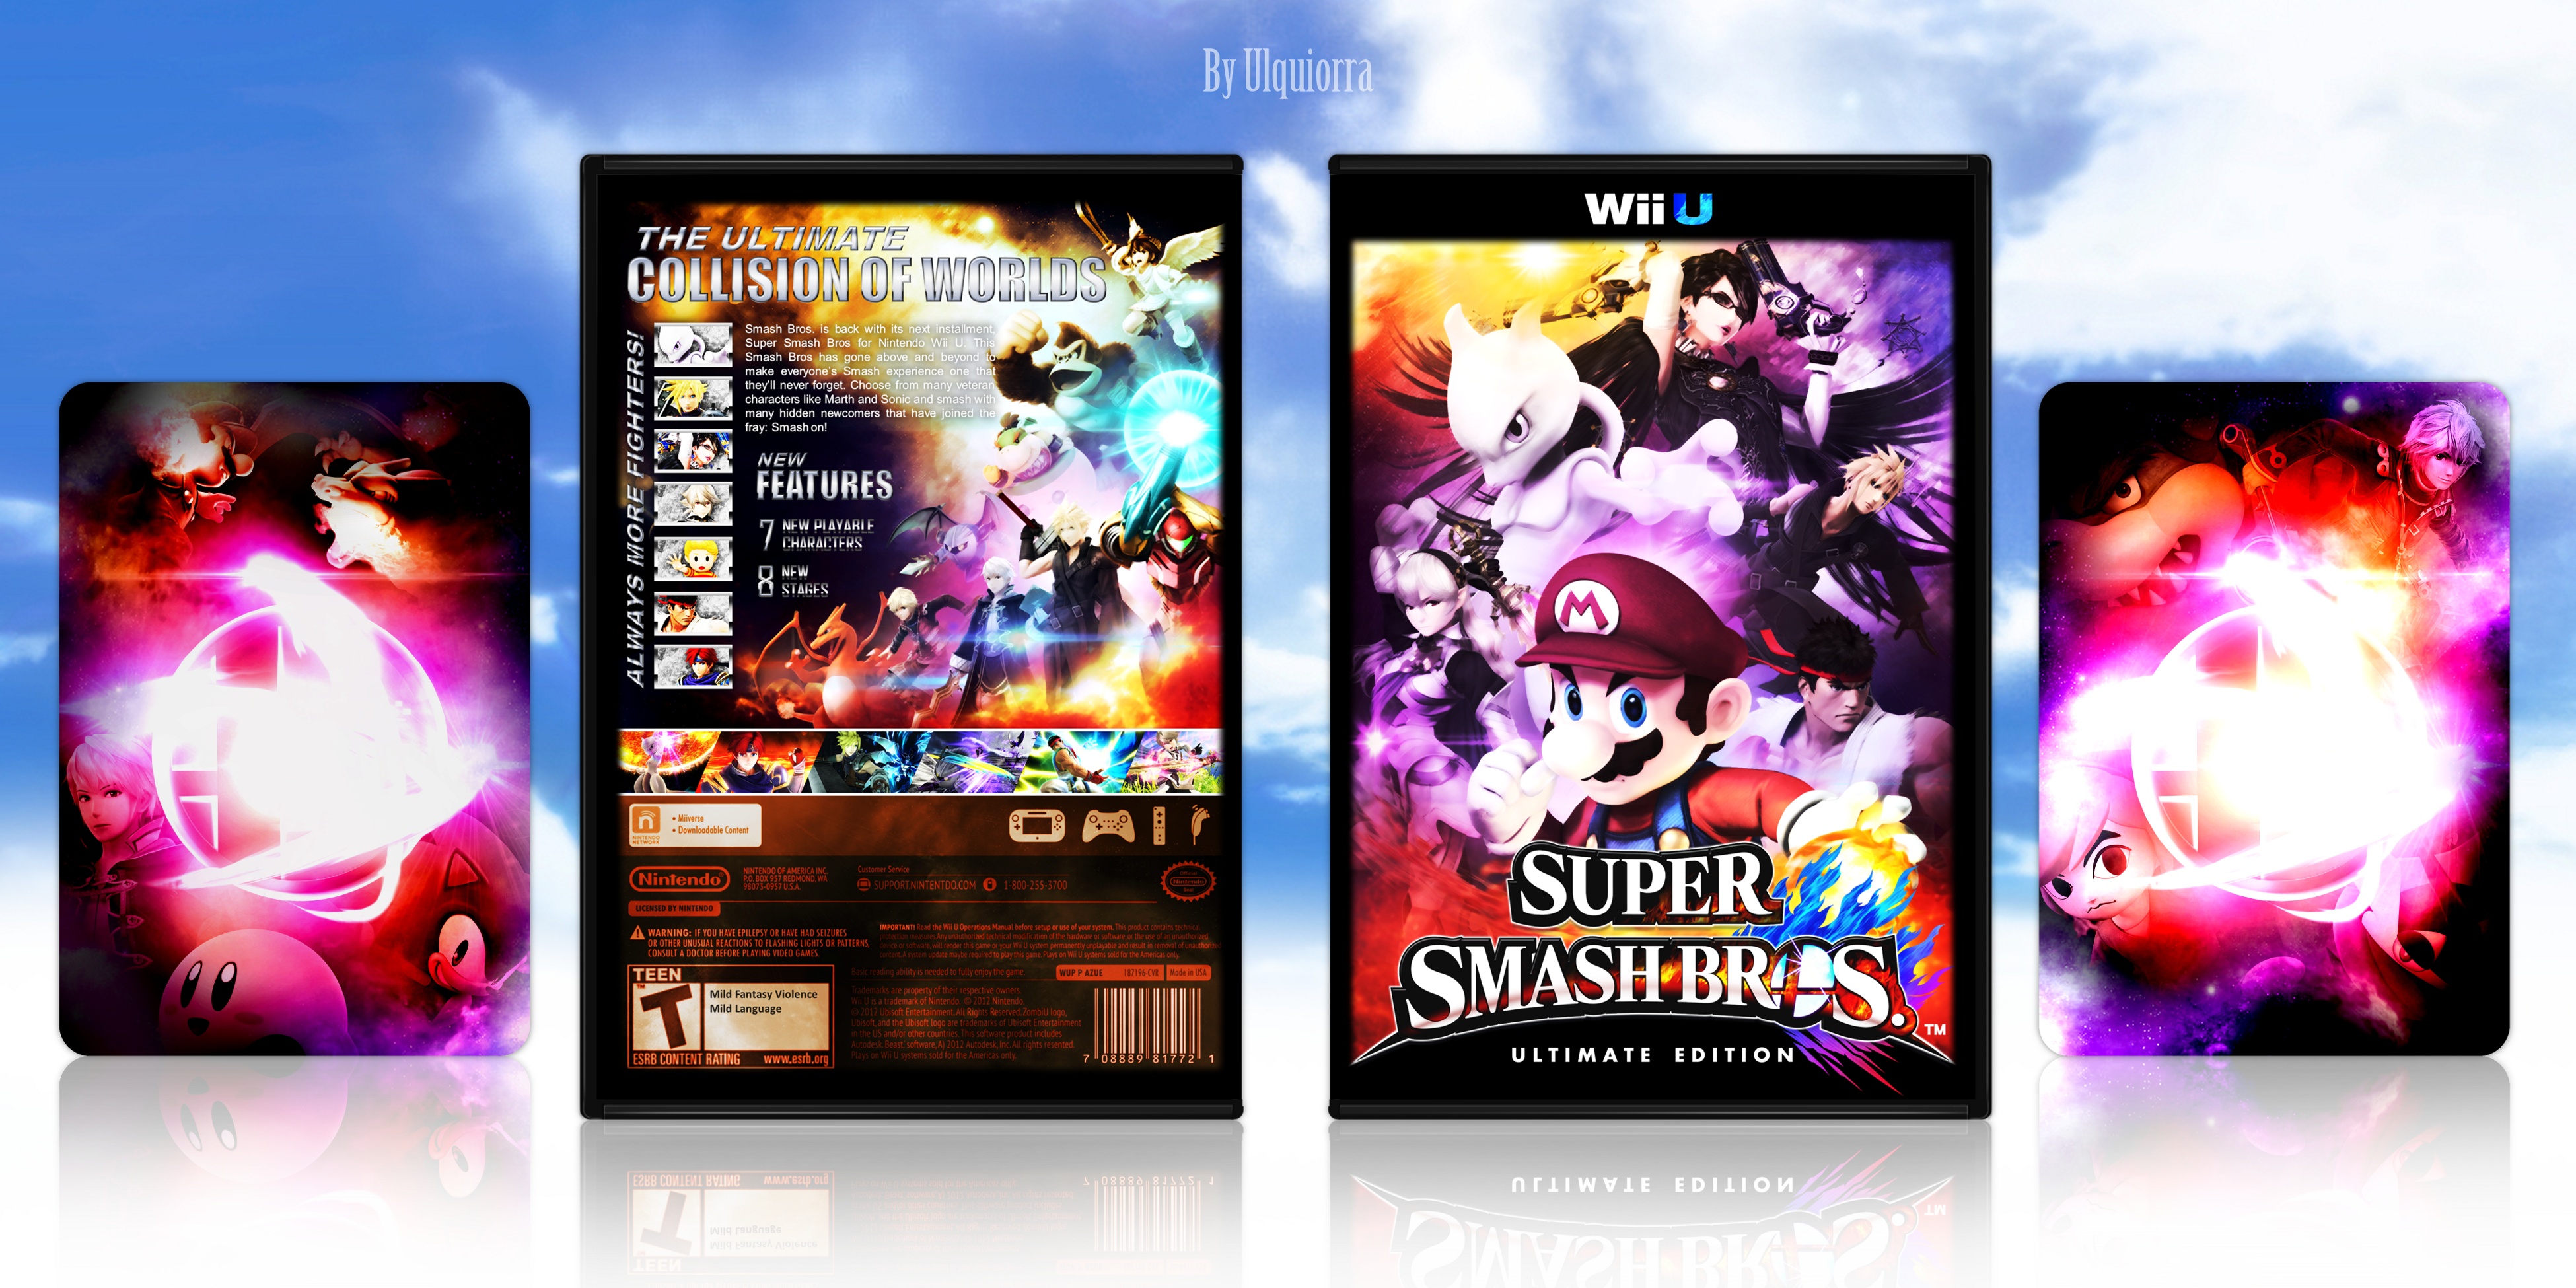 Super Smash Bros. for Wii U: Ultimate Edition box cover